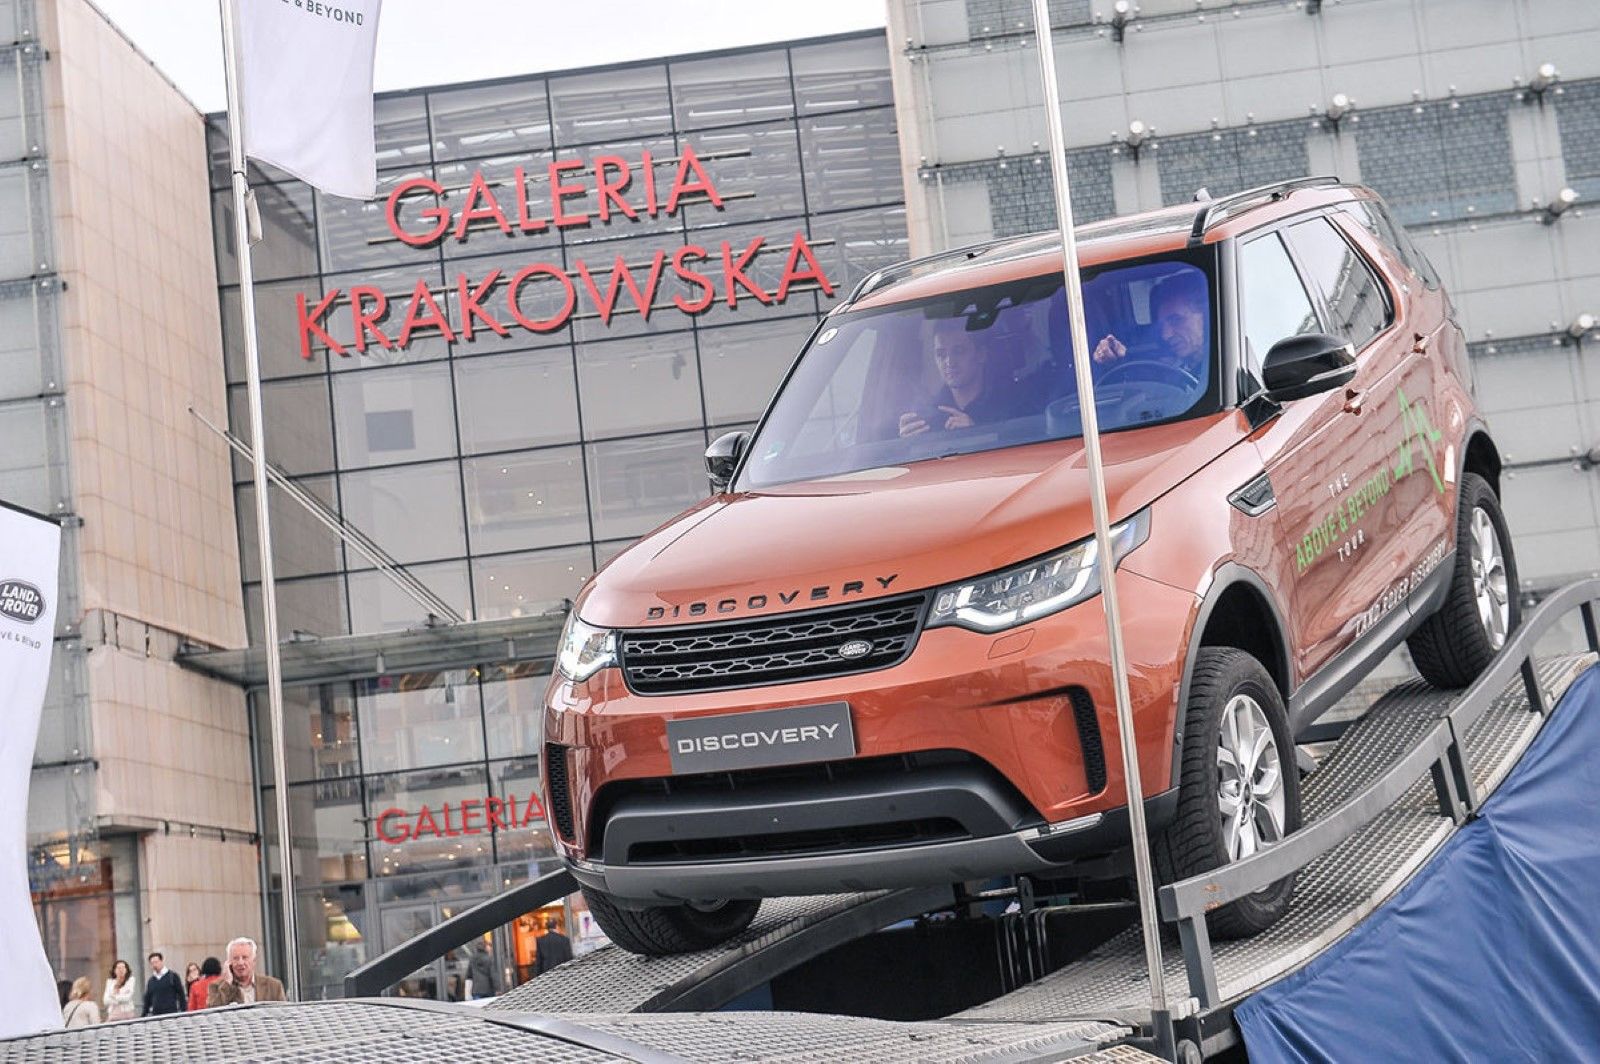 GALERIA ABOVE AND BEYOND TOUR KRAKÓW Land Rover Polska